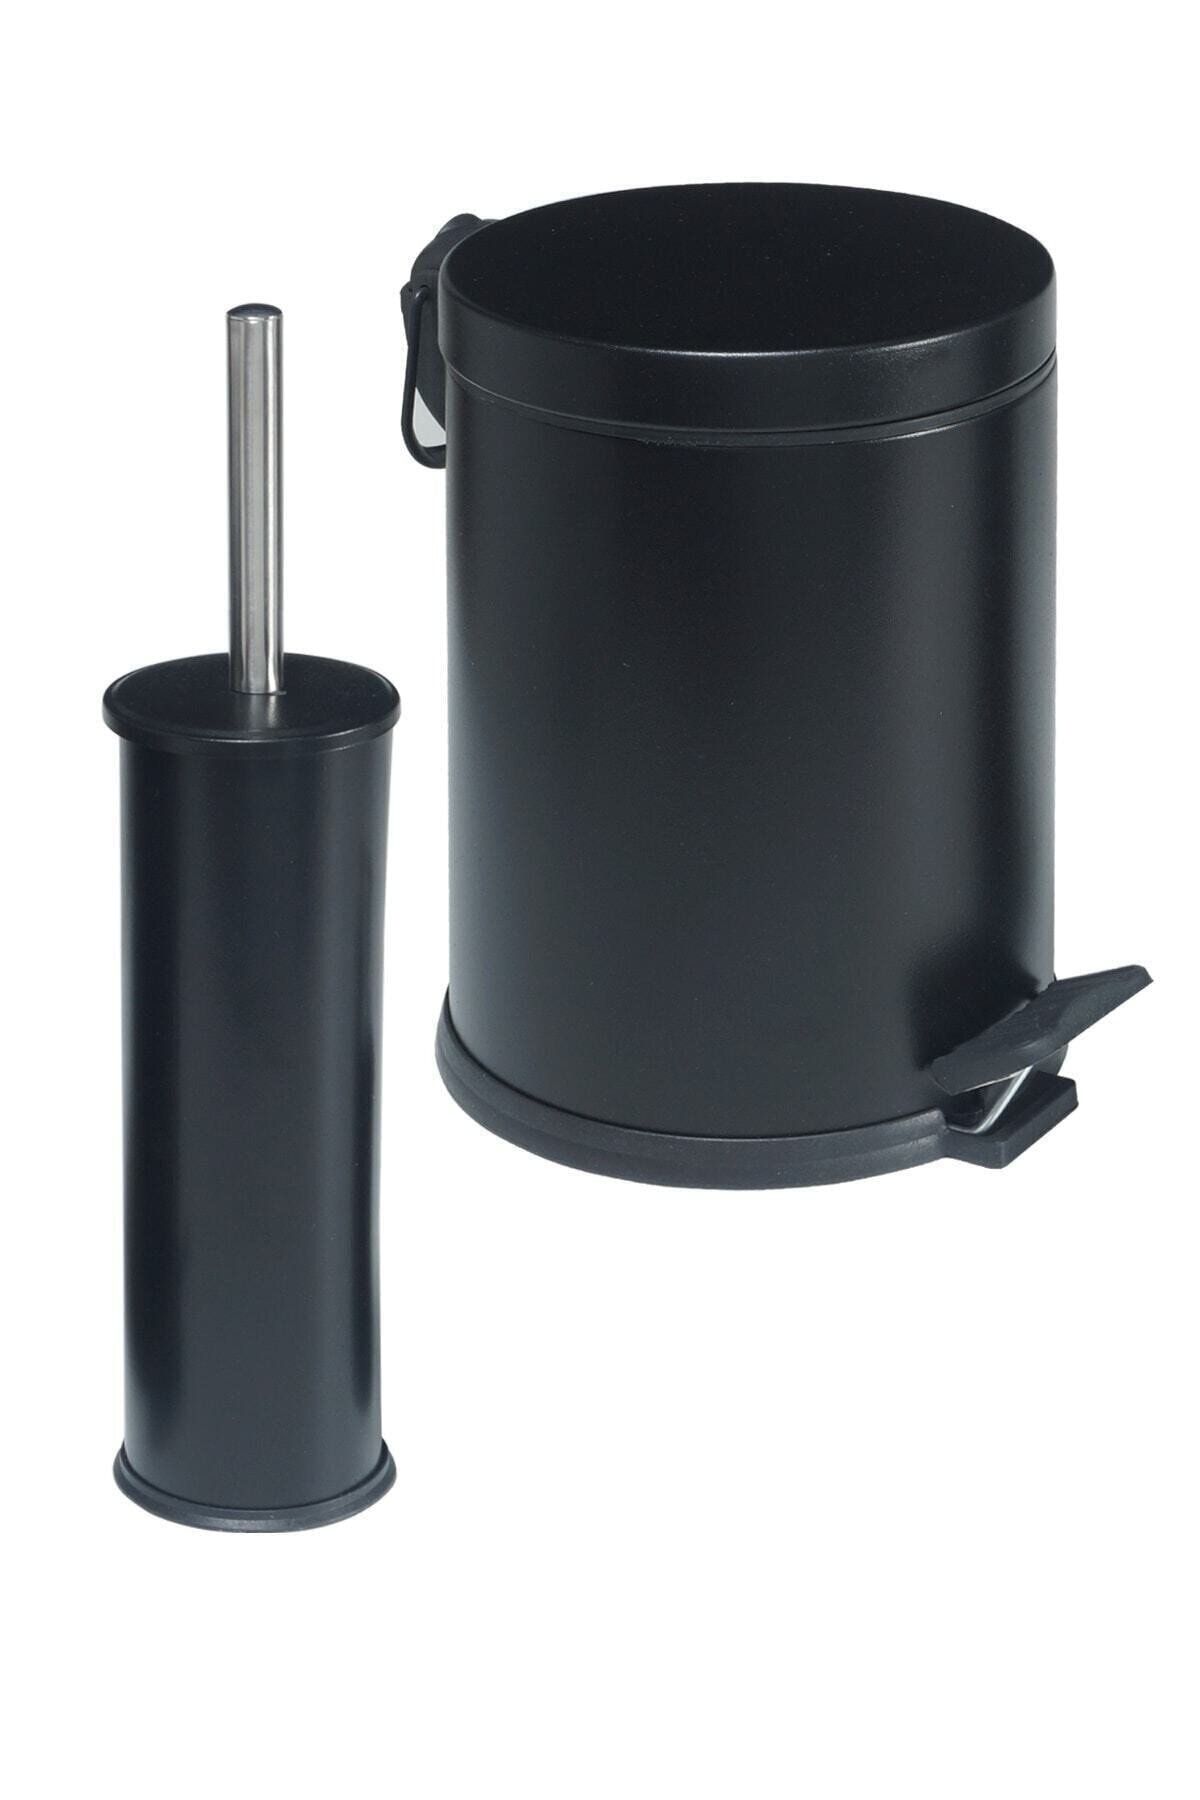 GörSeç 3 Litre Siyah 2'li Banyo Seti Pedallı Çöp Kovası Wc Klozet Tuvalet Fırça Seti Banyo Çöp Kovası